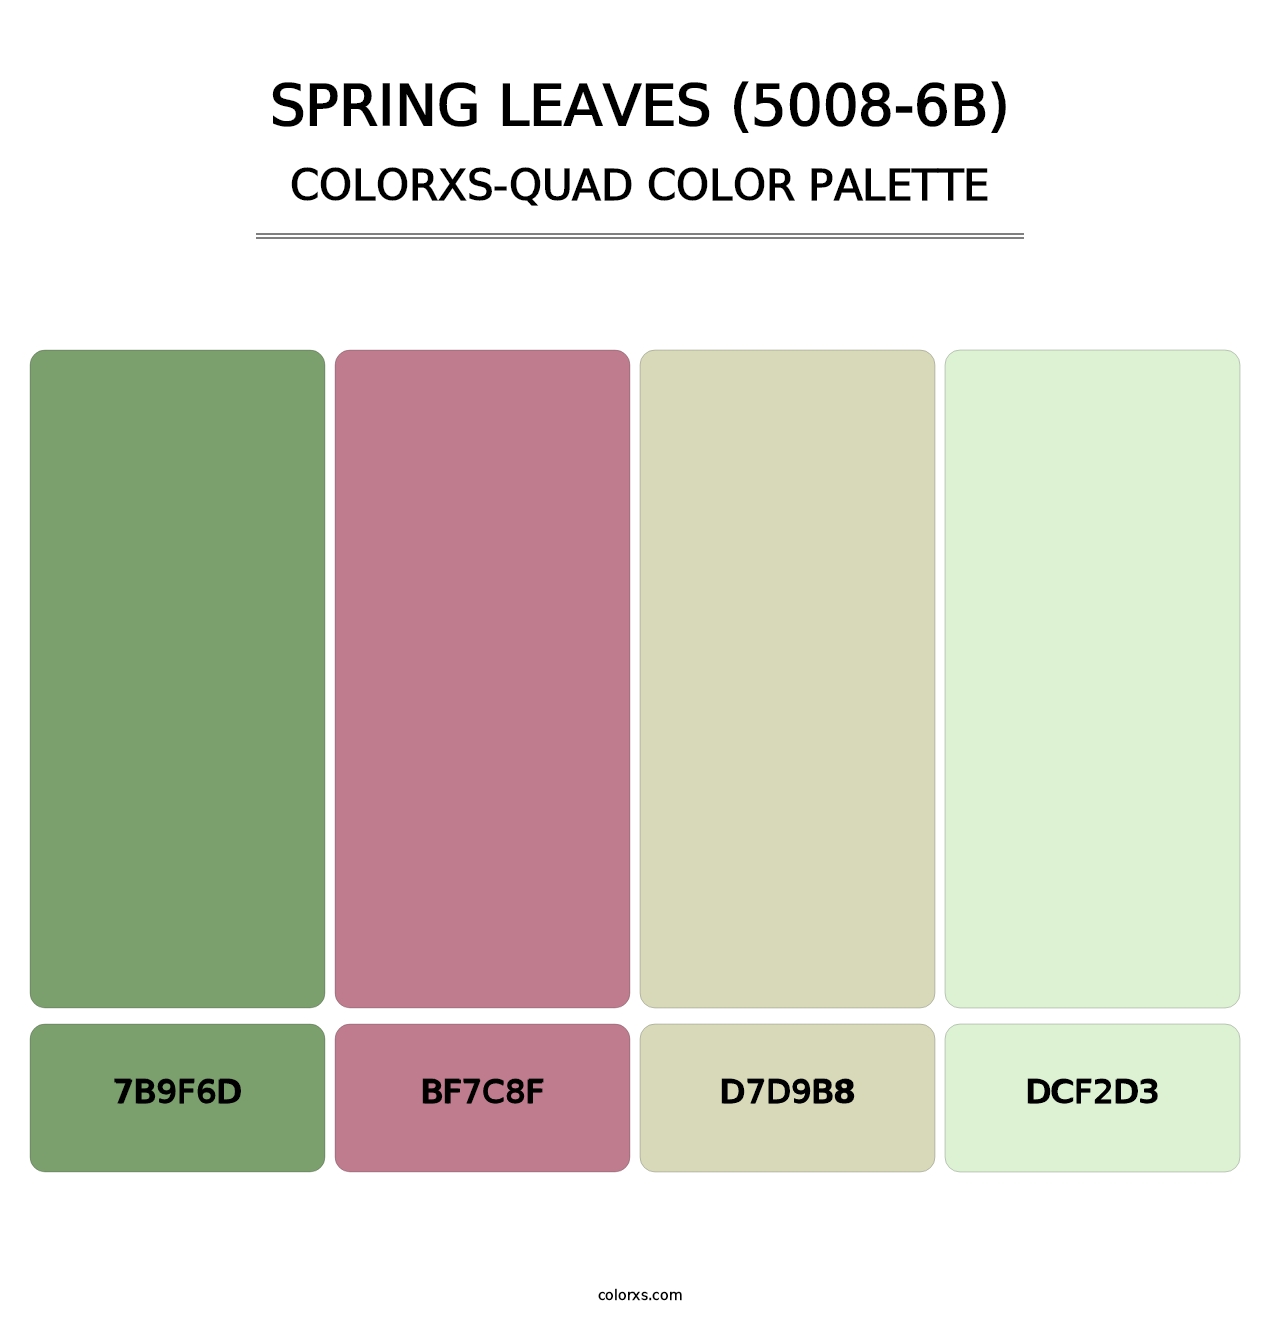 Spring Leaves (5008-6B) - Colorxs Quad Palette